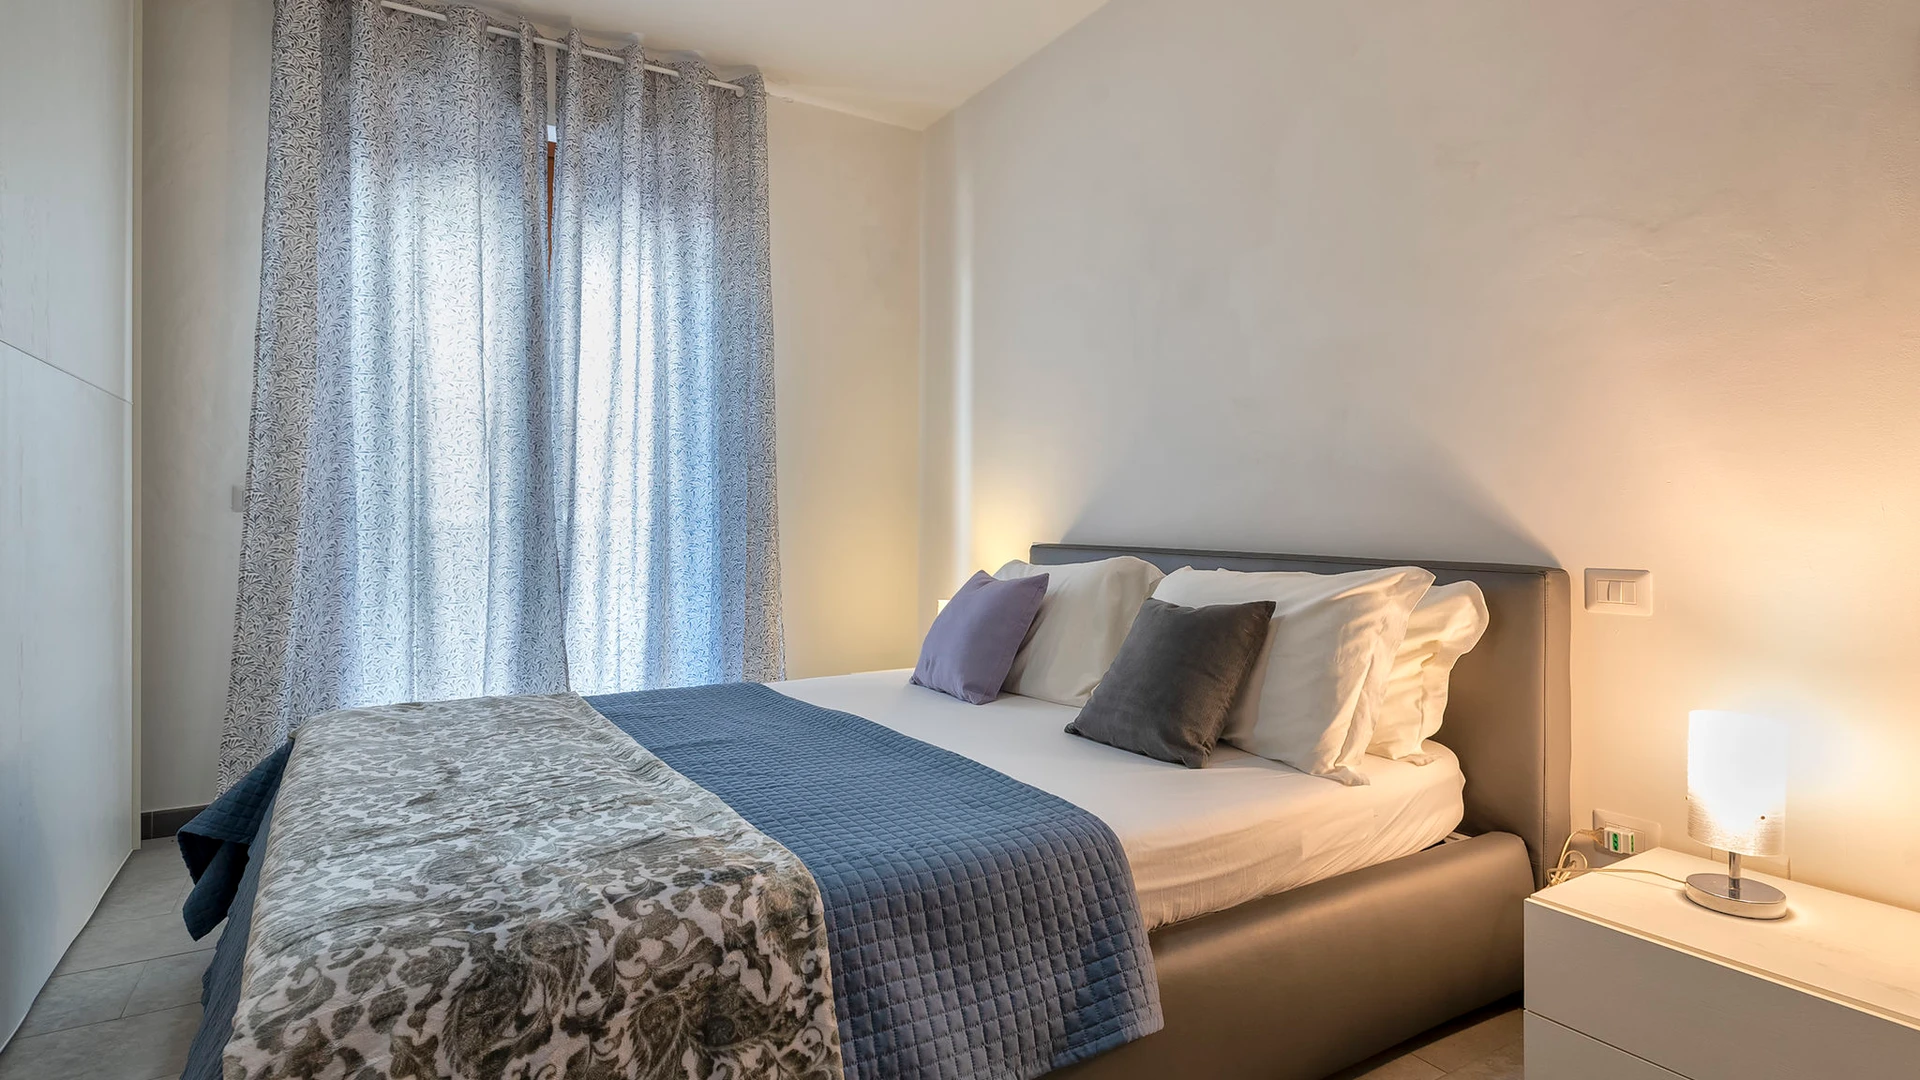 Two bedroom accommodation in L'alguer/alghero